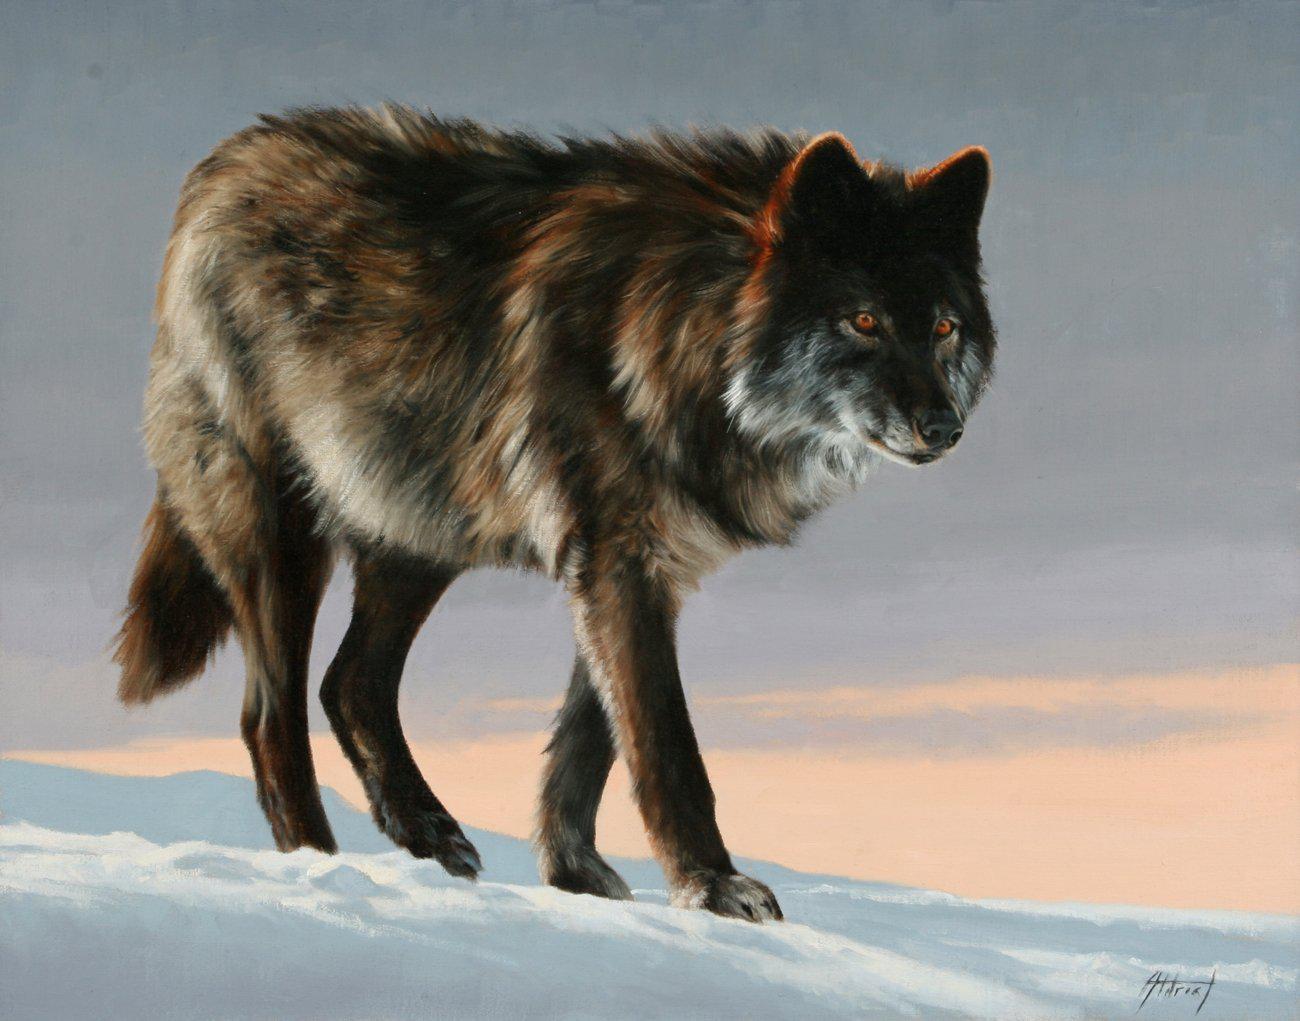 Black Wolf-Painting-Edward Aldrich-Sorrel Sky Gallery